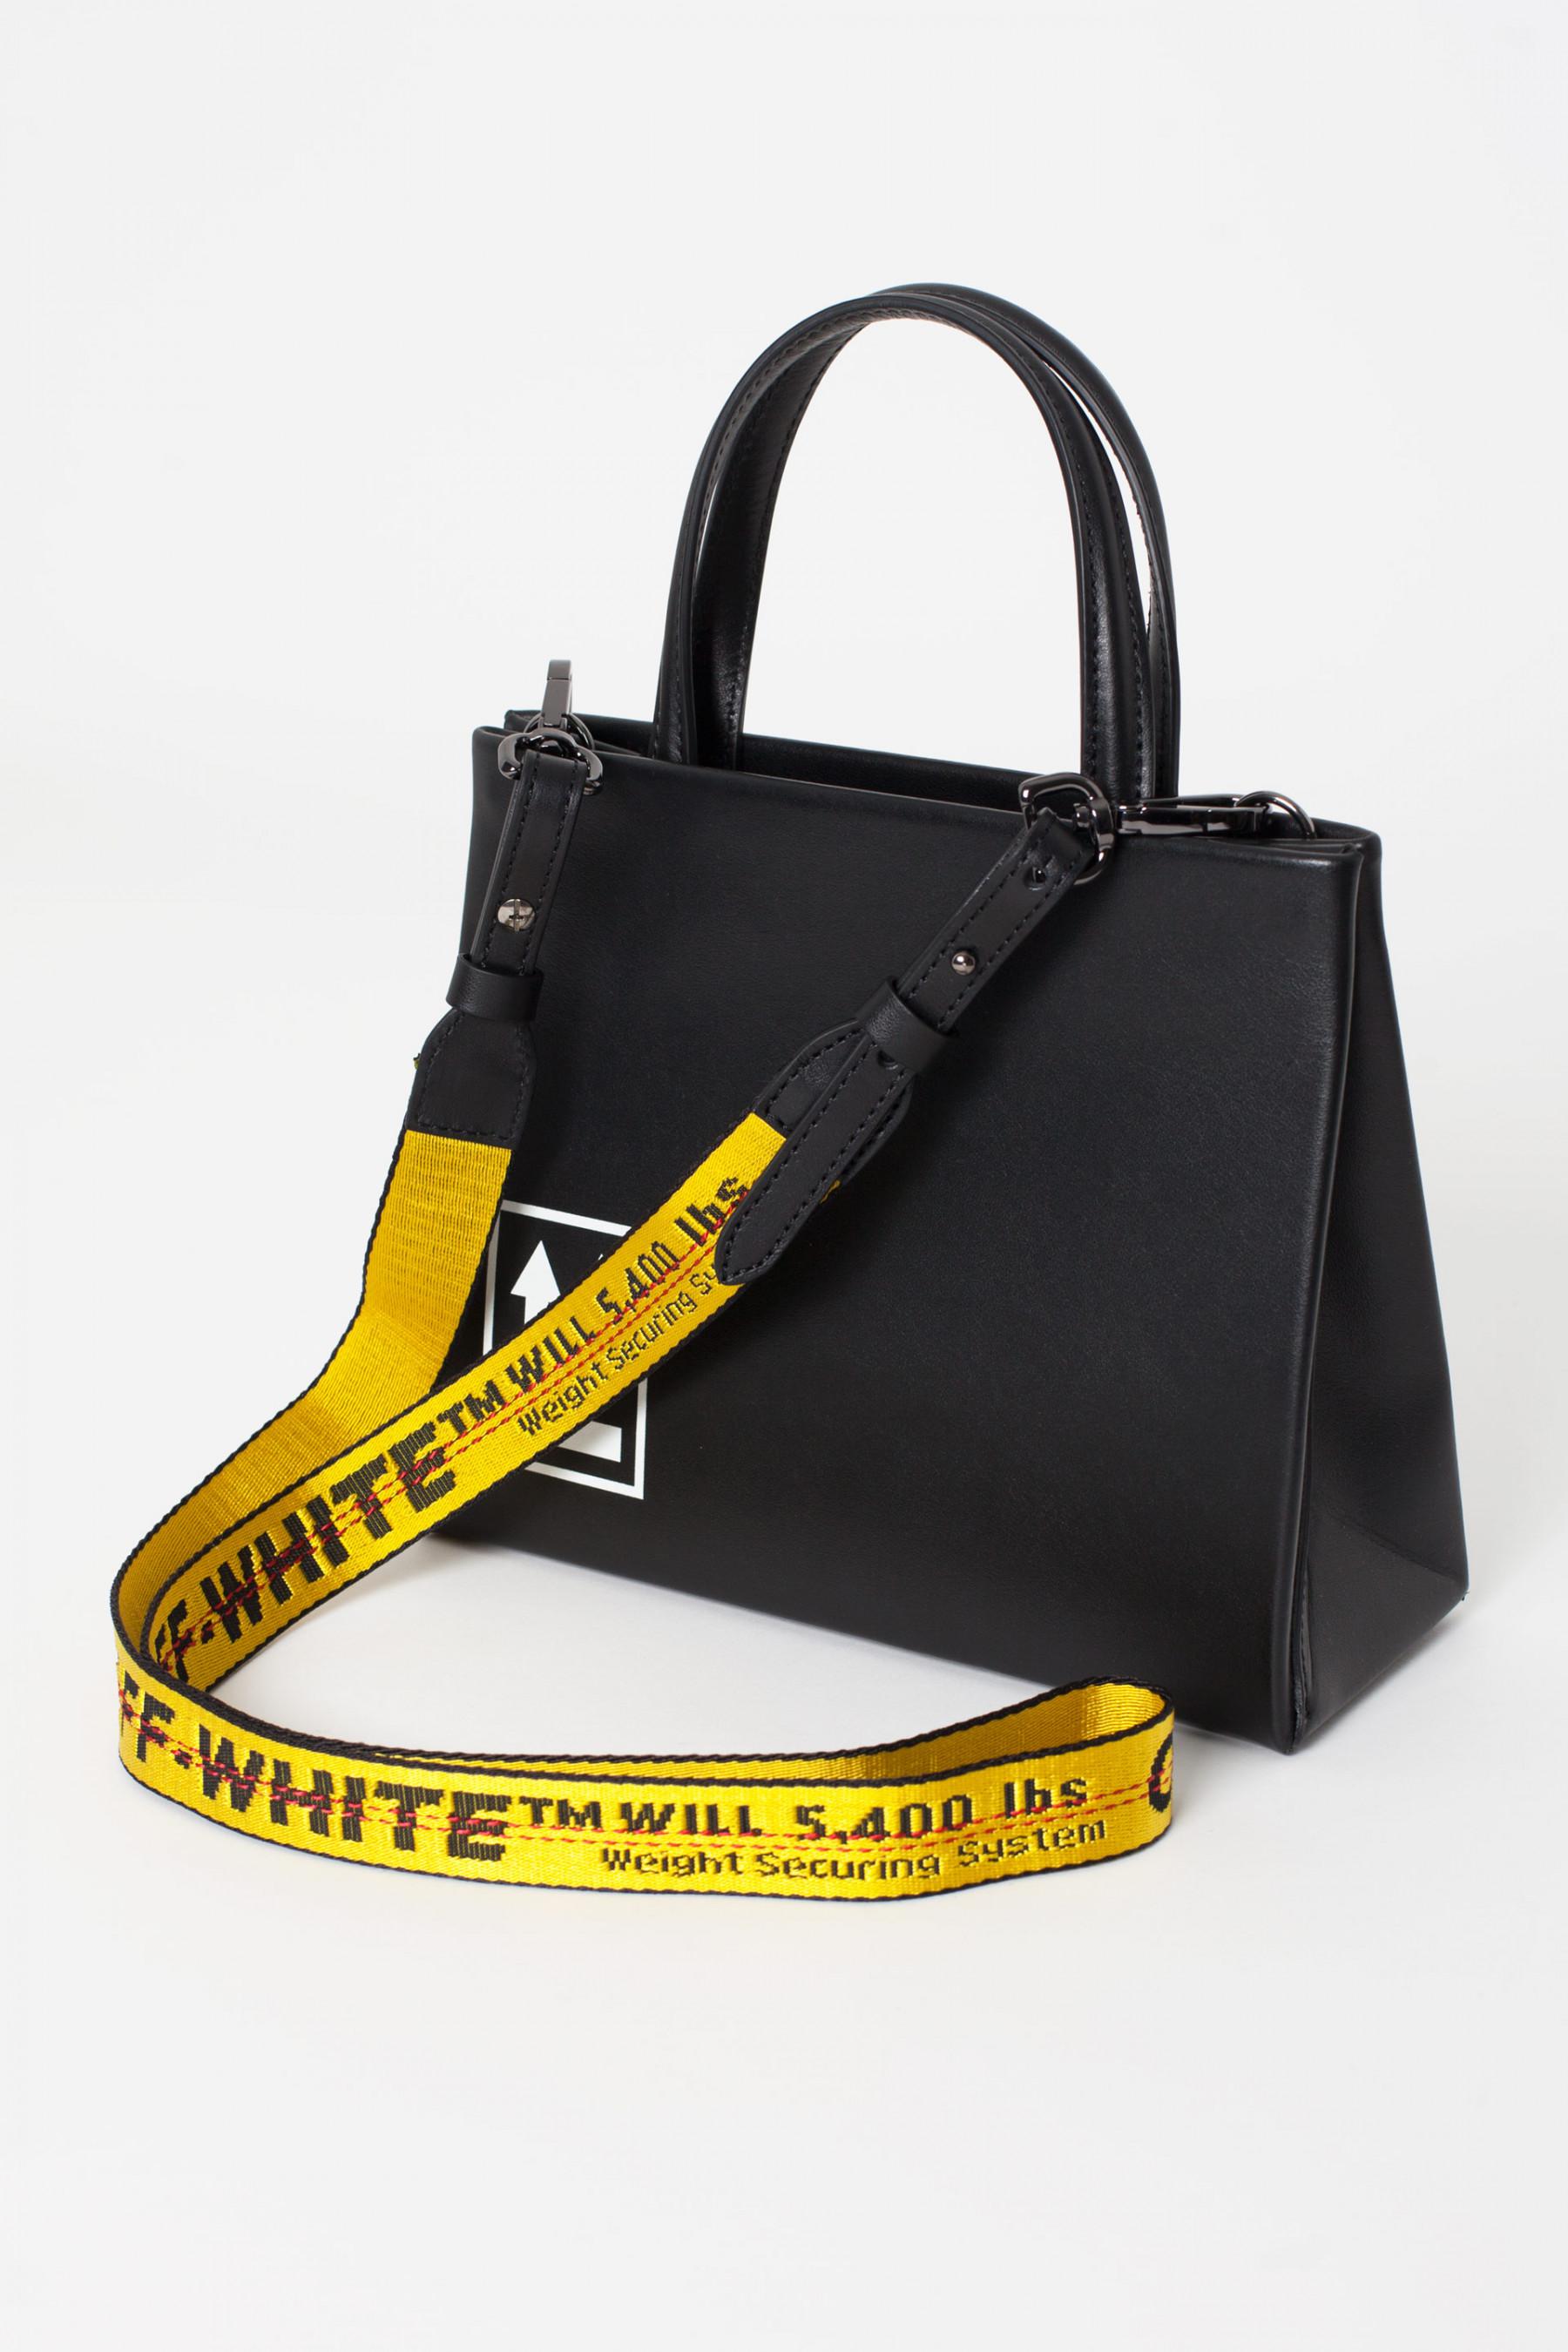 Off-White c/o Virgil Abloh Leather Black Mini Box Bag | Lyst